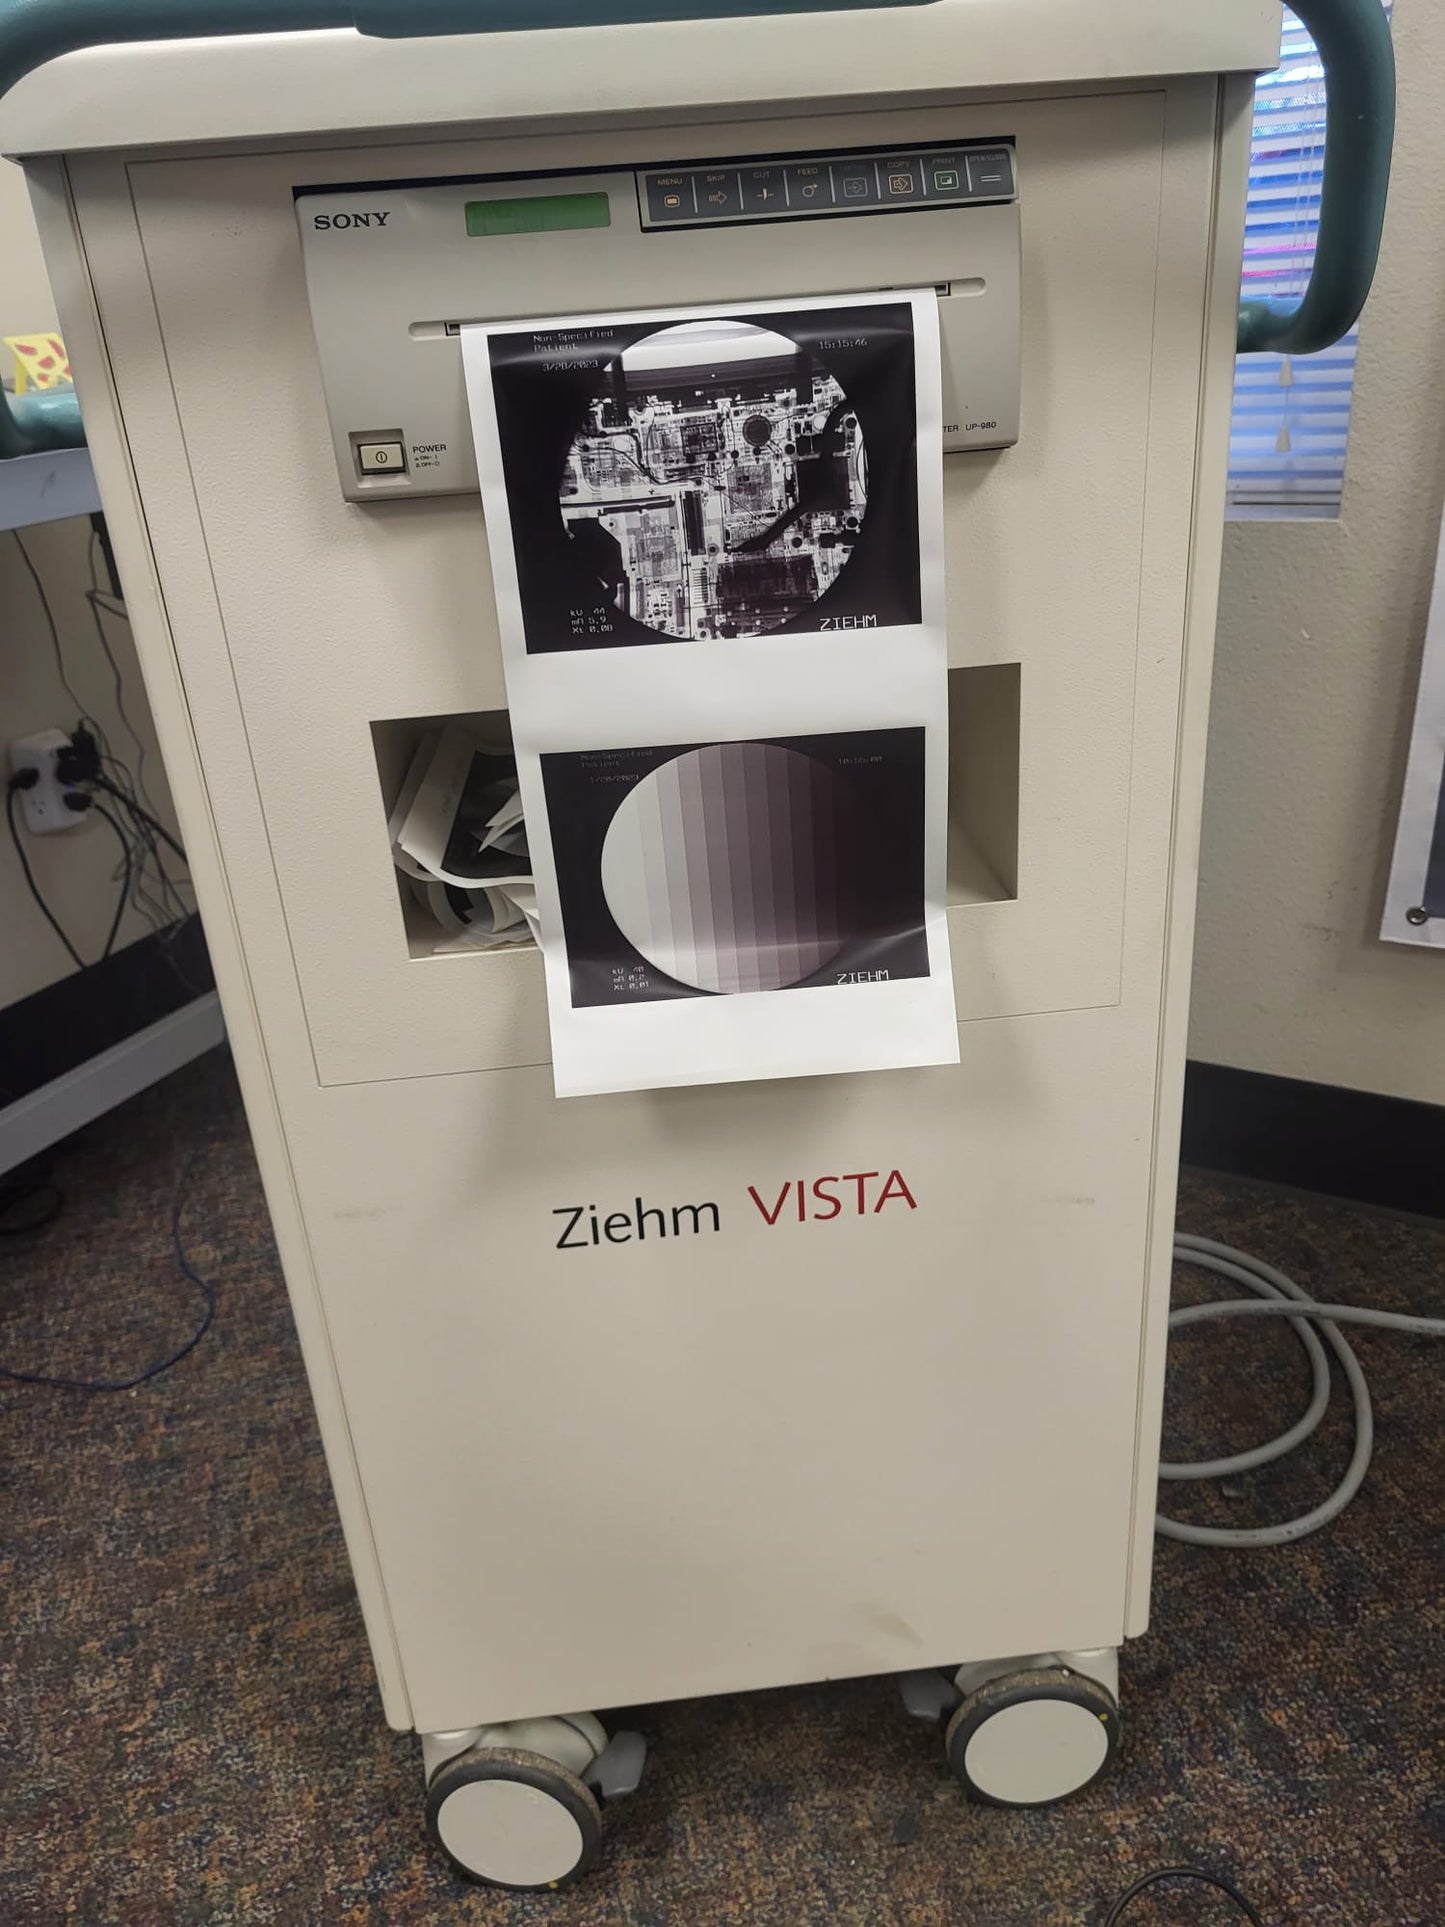 Ziehm Vista 2002 with Cine, Vascular, Sony Printer